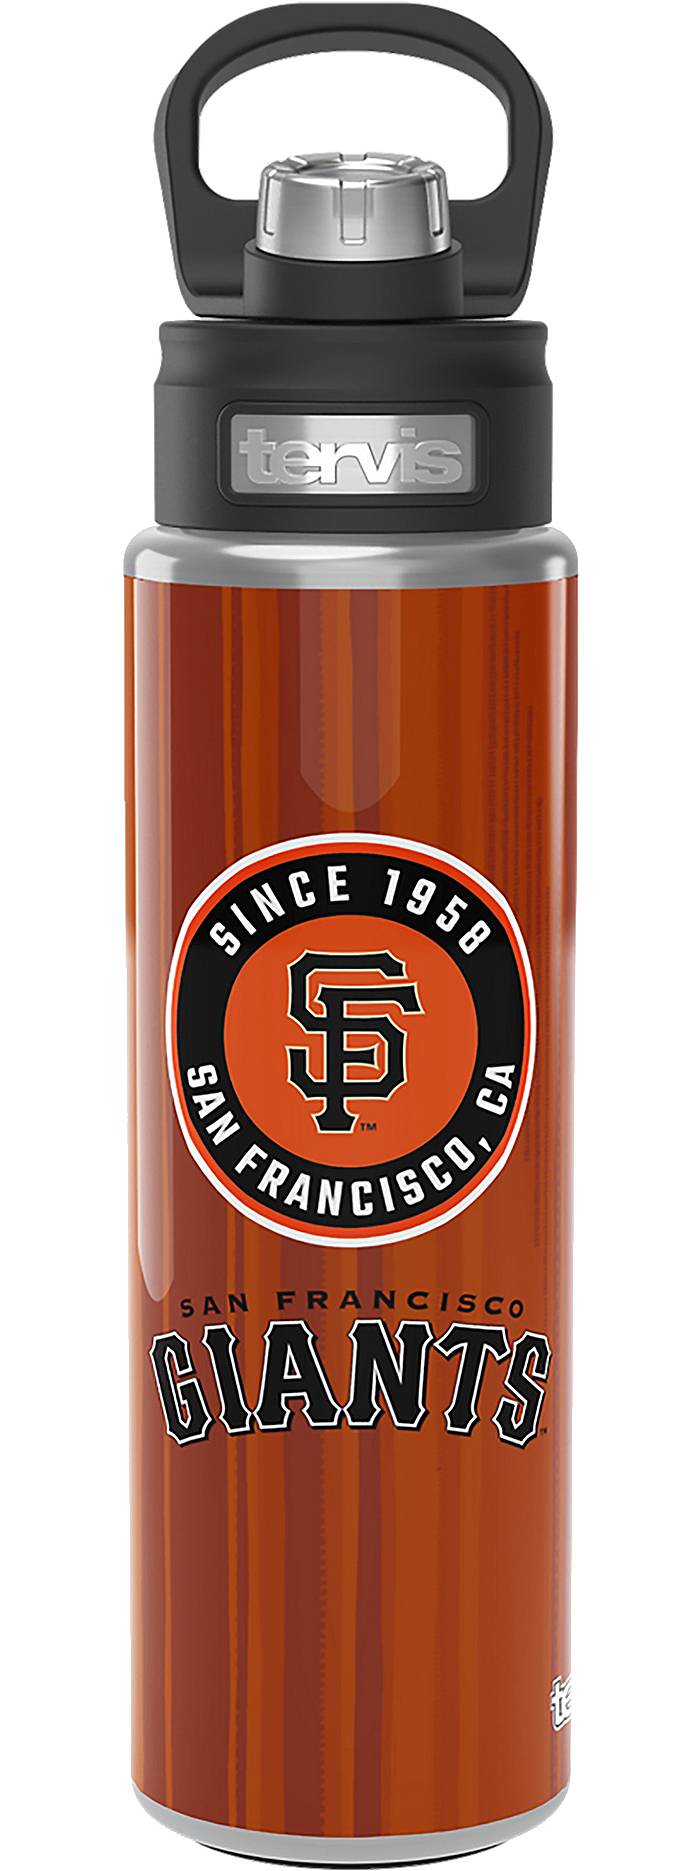 San Francisco Giants 16oz. Stainless Steel Water Bottle